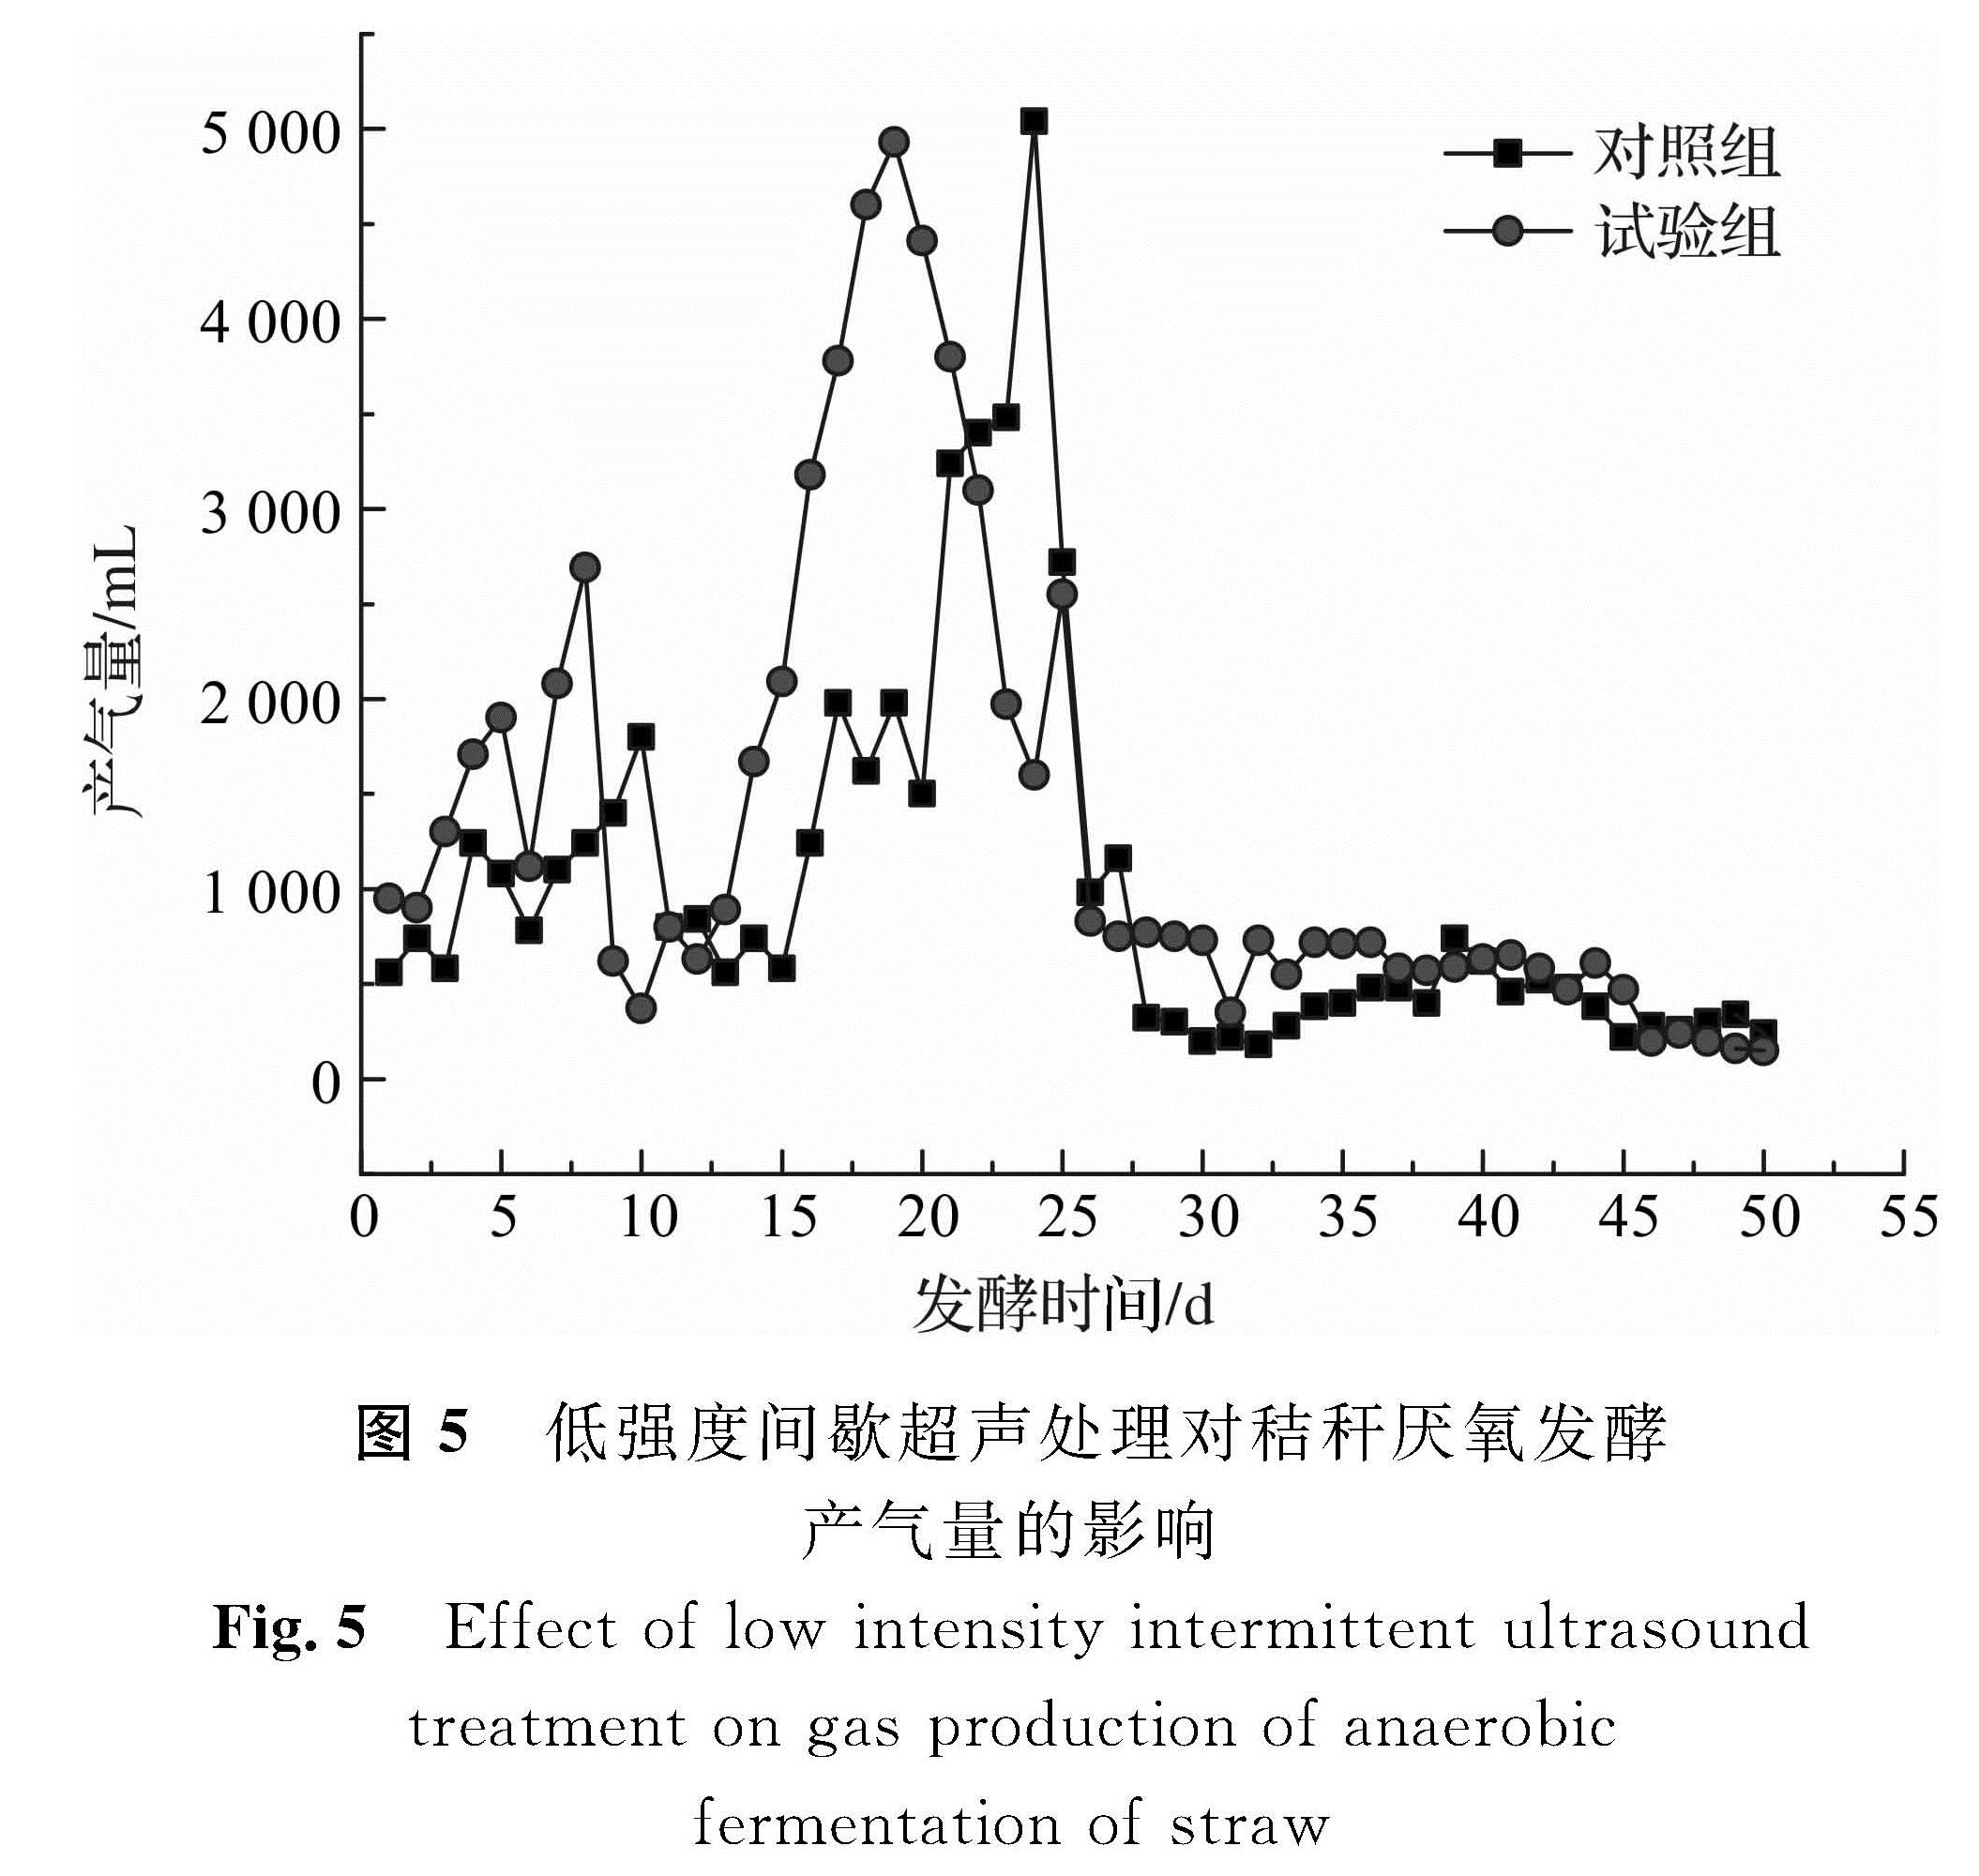 图5 低强度间歇超声处理对秸秆厌氧发酵产气量的影响<br/>Fig.5 Effect of low intensity intermittent ultrasound treatment on gas production of anaerobic fermentation of straw